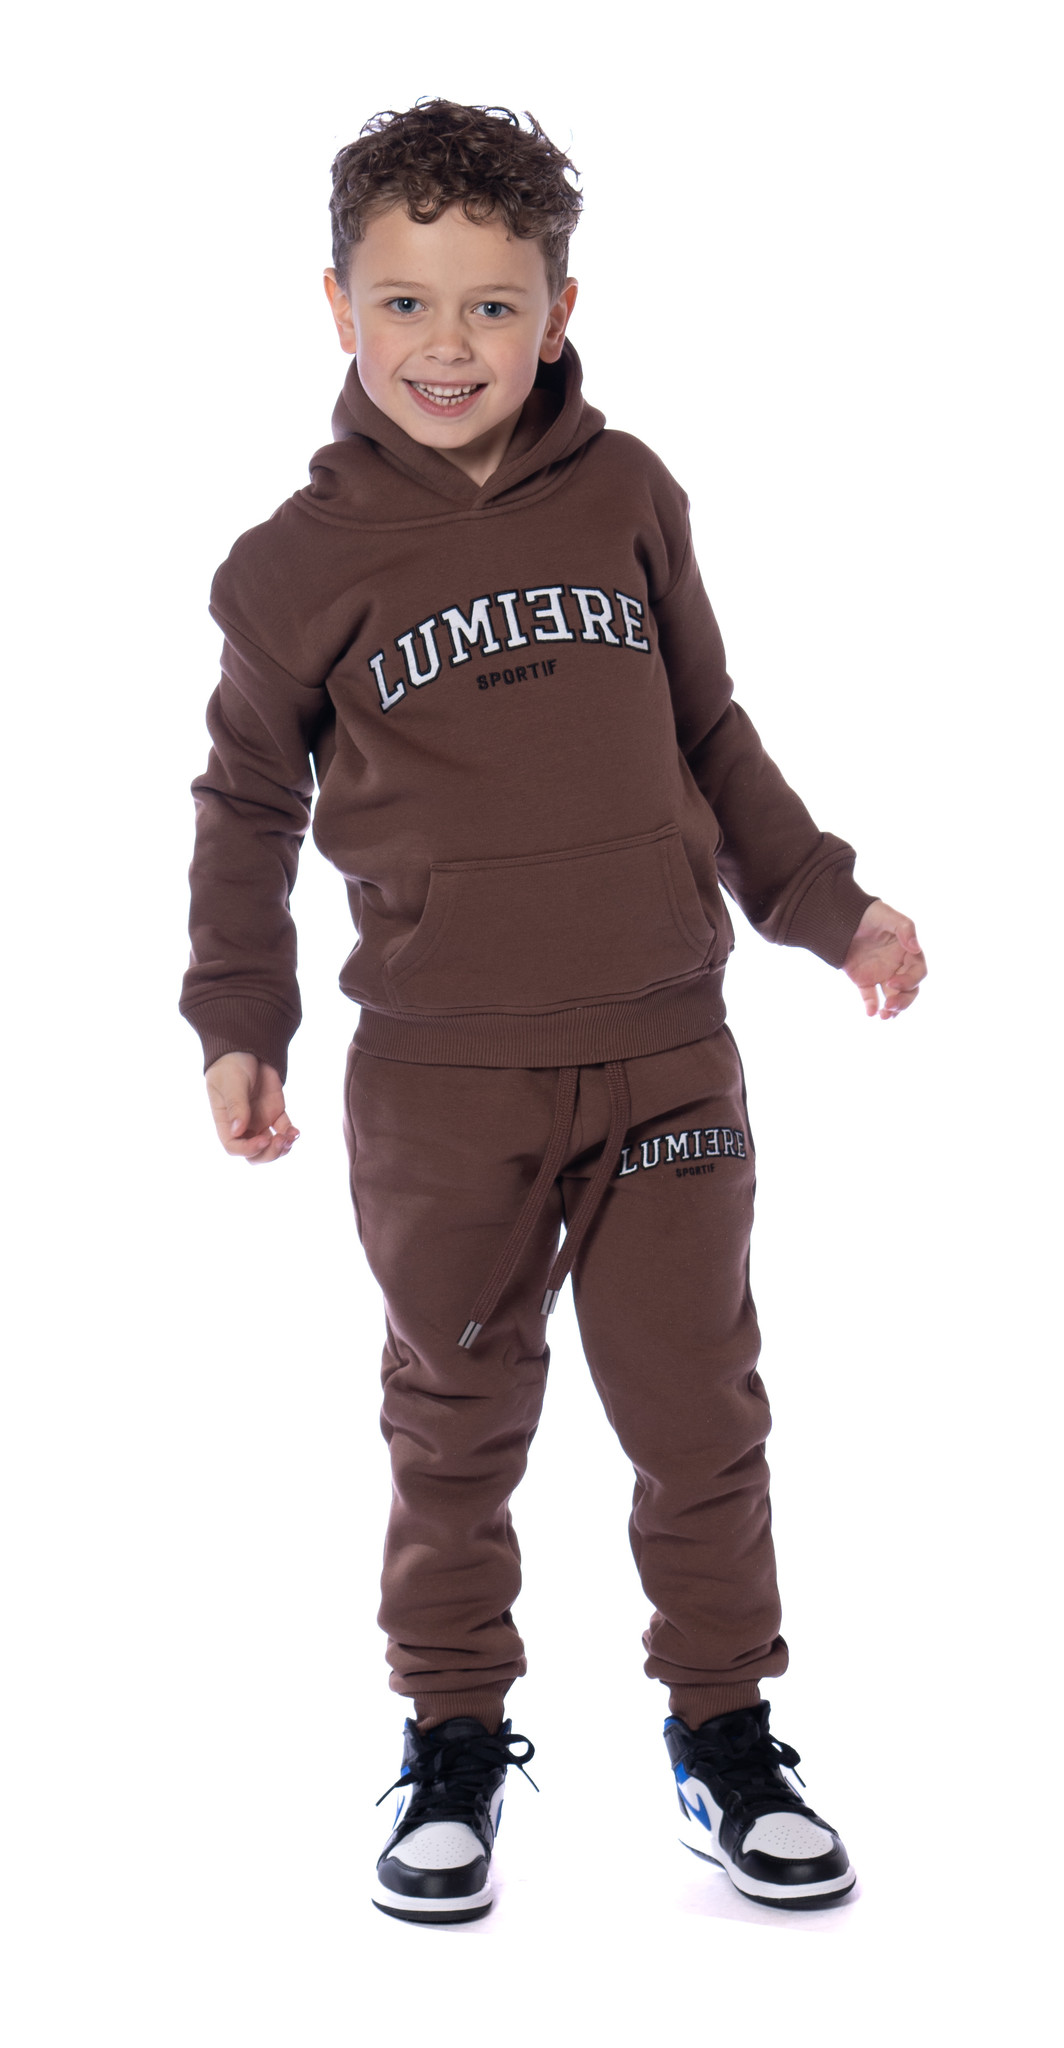 Lumi3re Sportif Kids Dark Brown - LUMI3RE